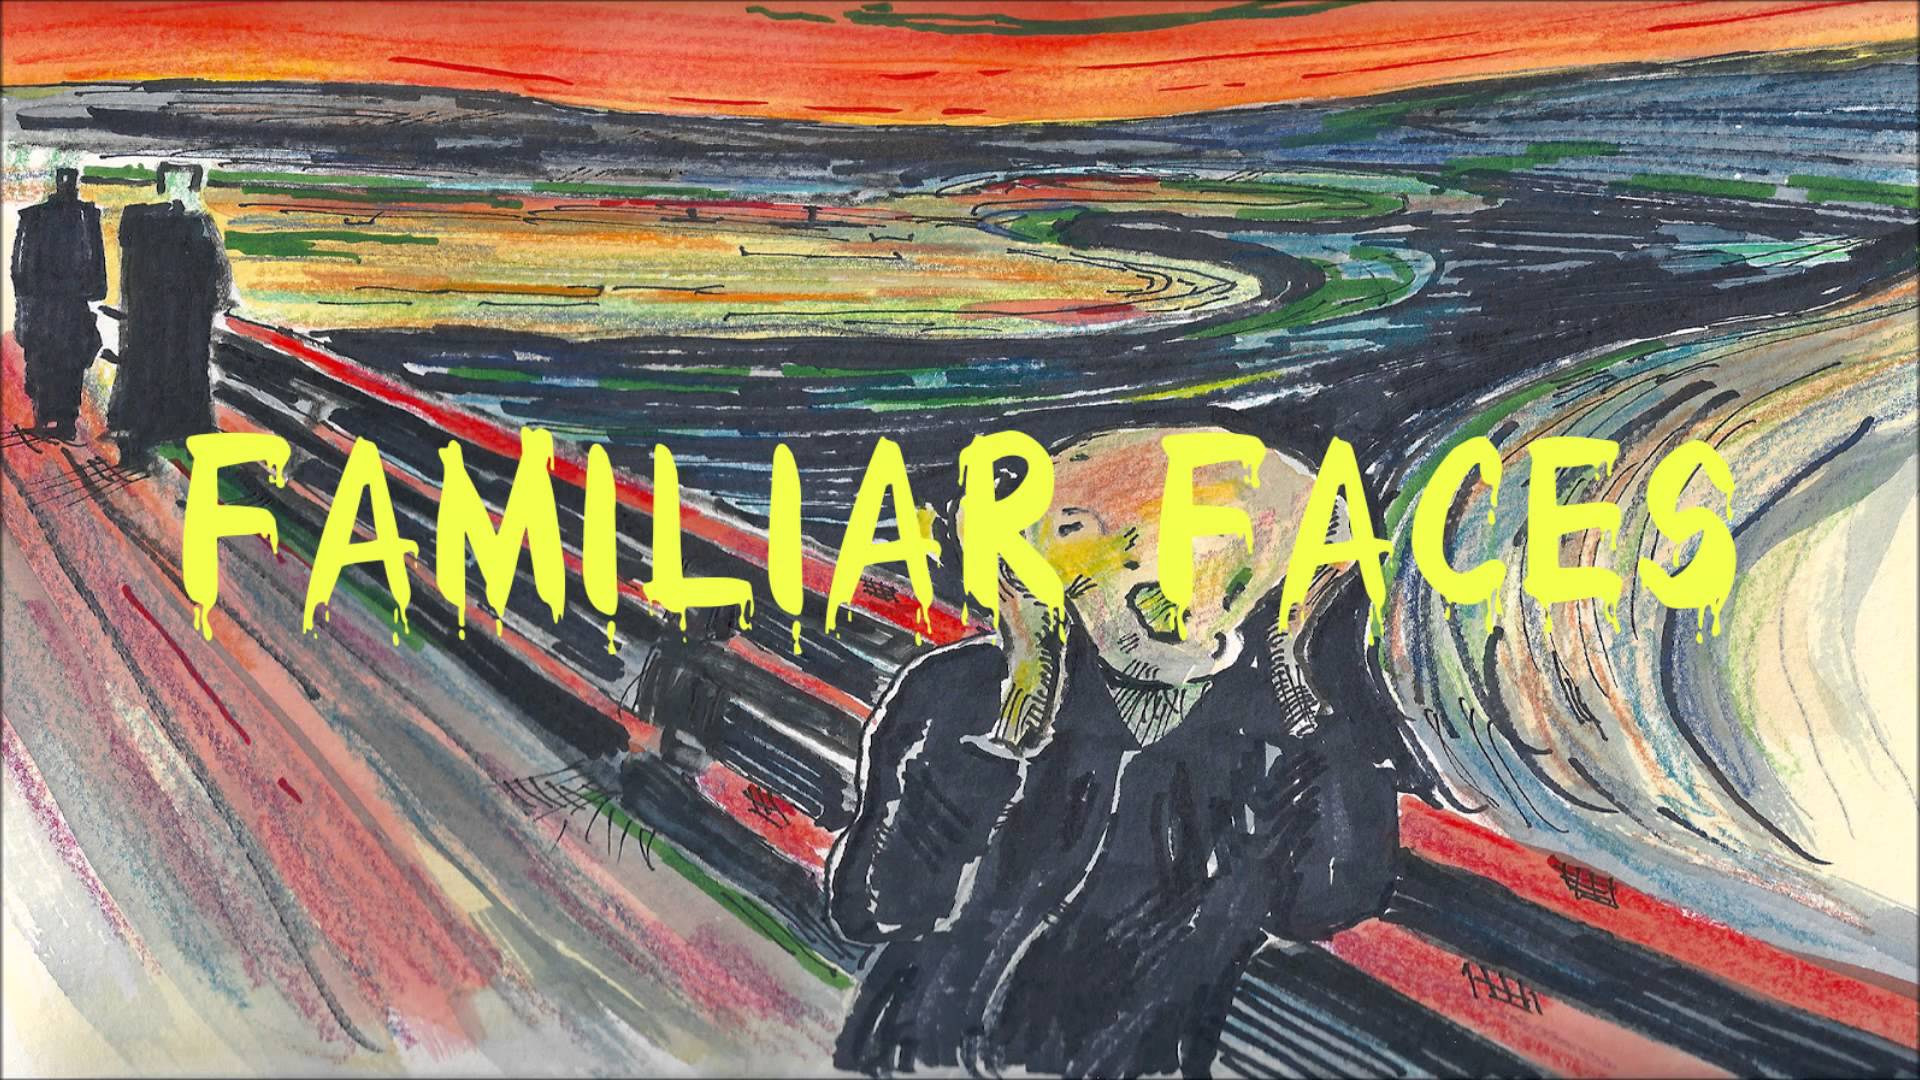 Mac Miller Faces Wallpapers - Top Free Mac Miller Faces Backgrounds - WallpaperAccess1920 x 1080